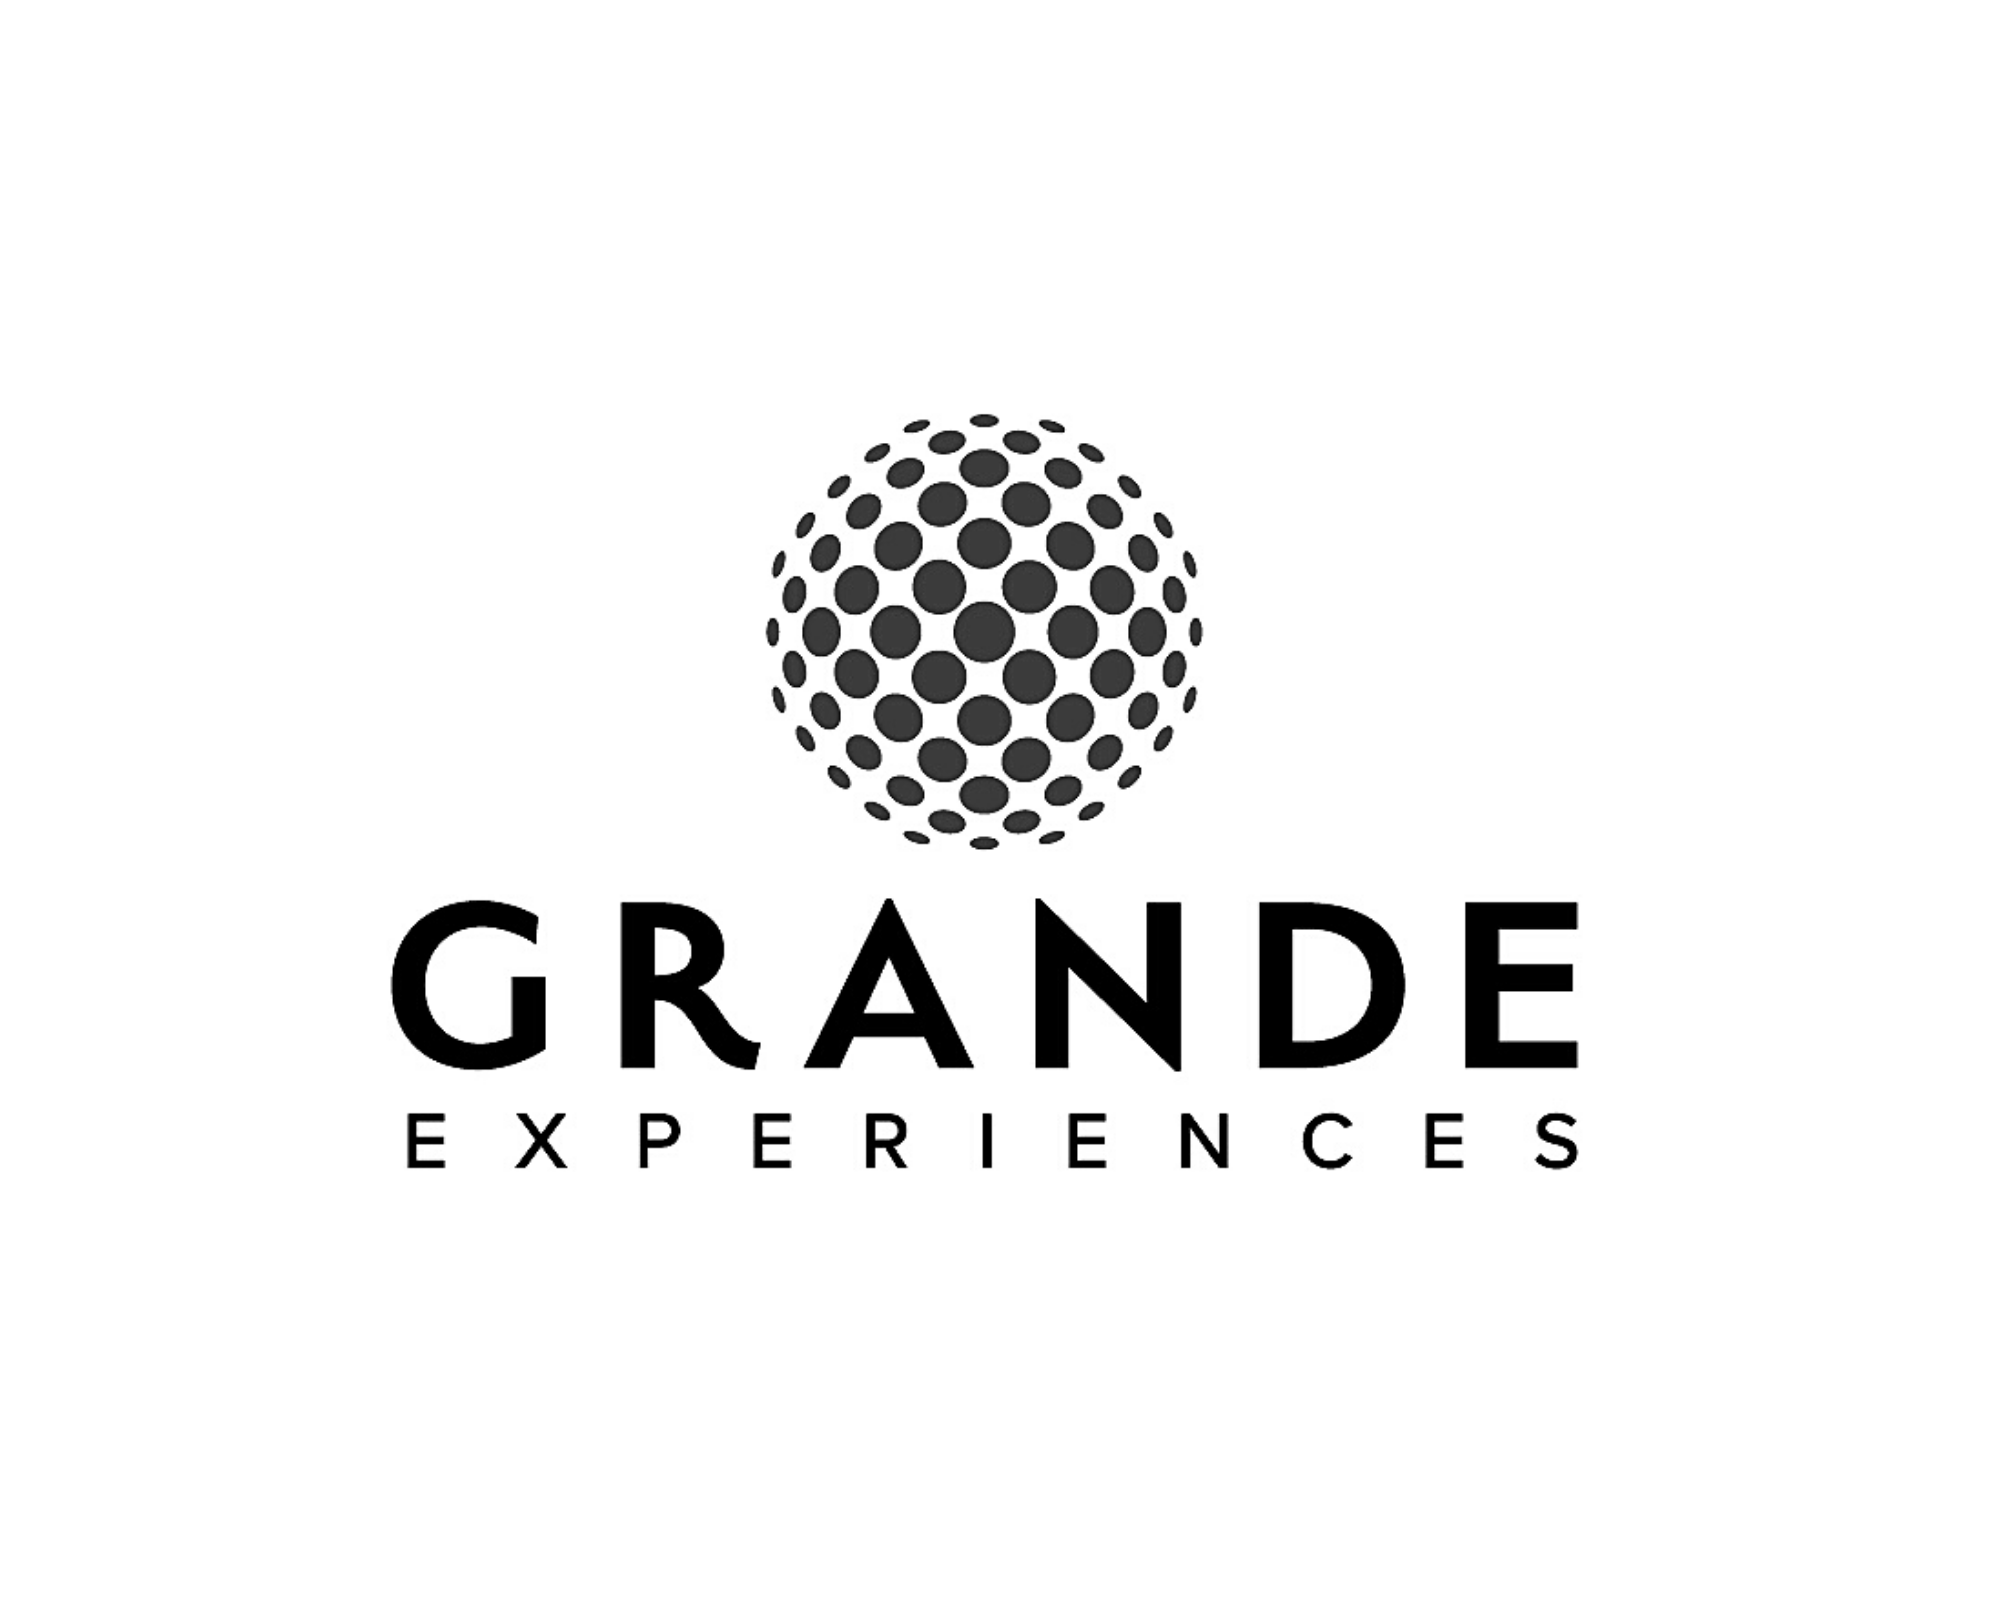 Grande Experiences logo